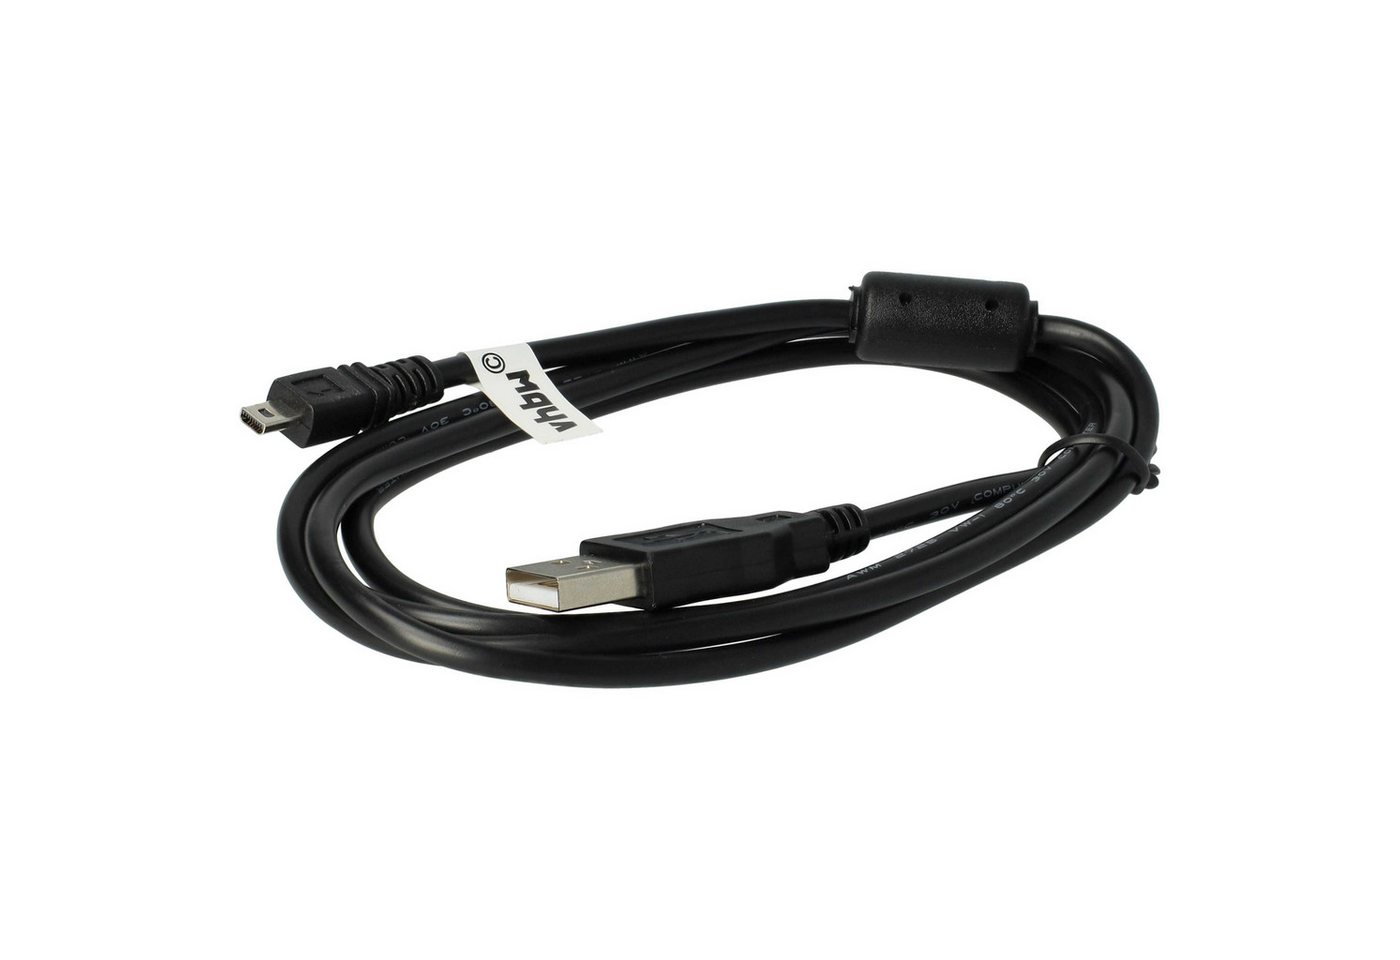 vhbw passend für Panasonic Lumix DMC-FS25, DMC-FS28, DMC-FS25 USB-Kabel von vhbw